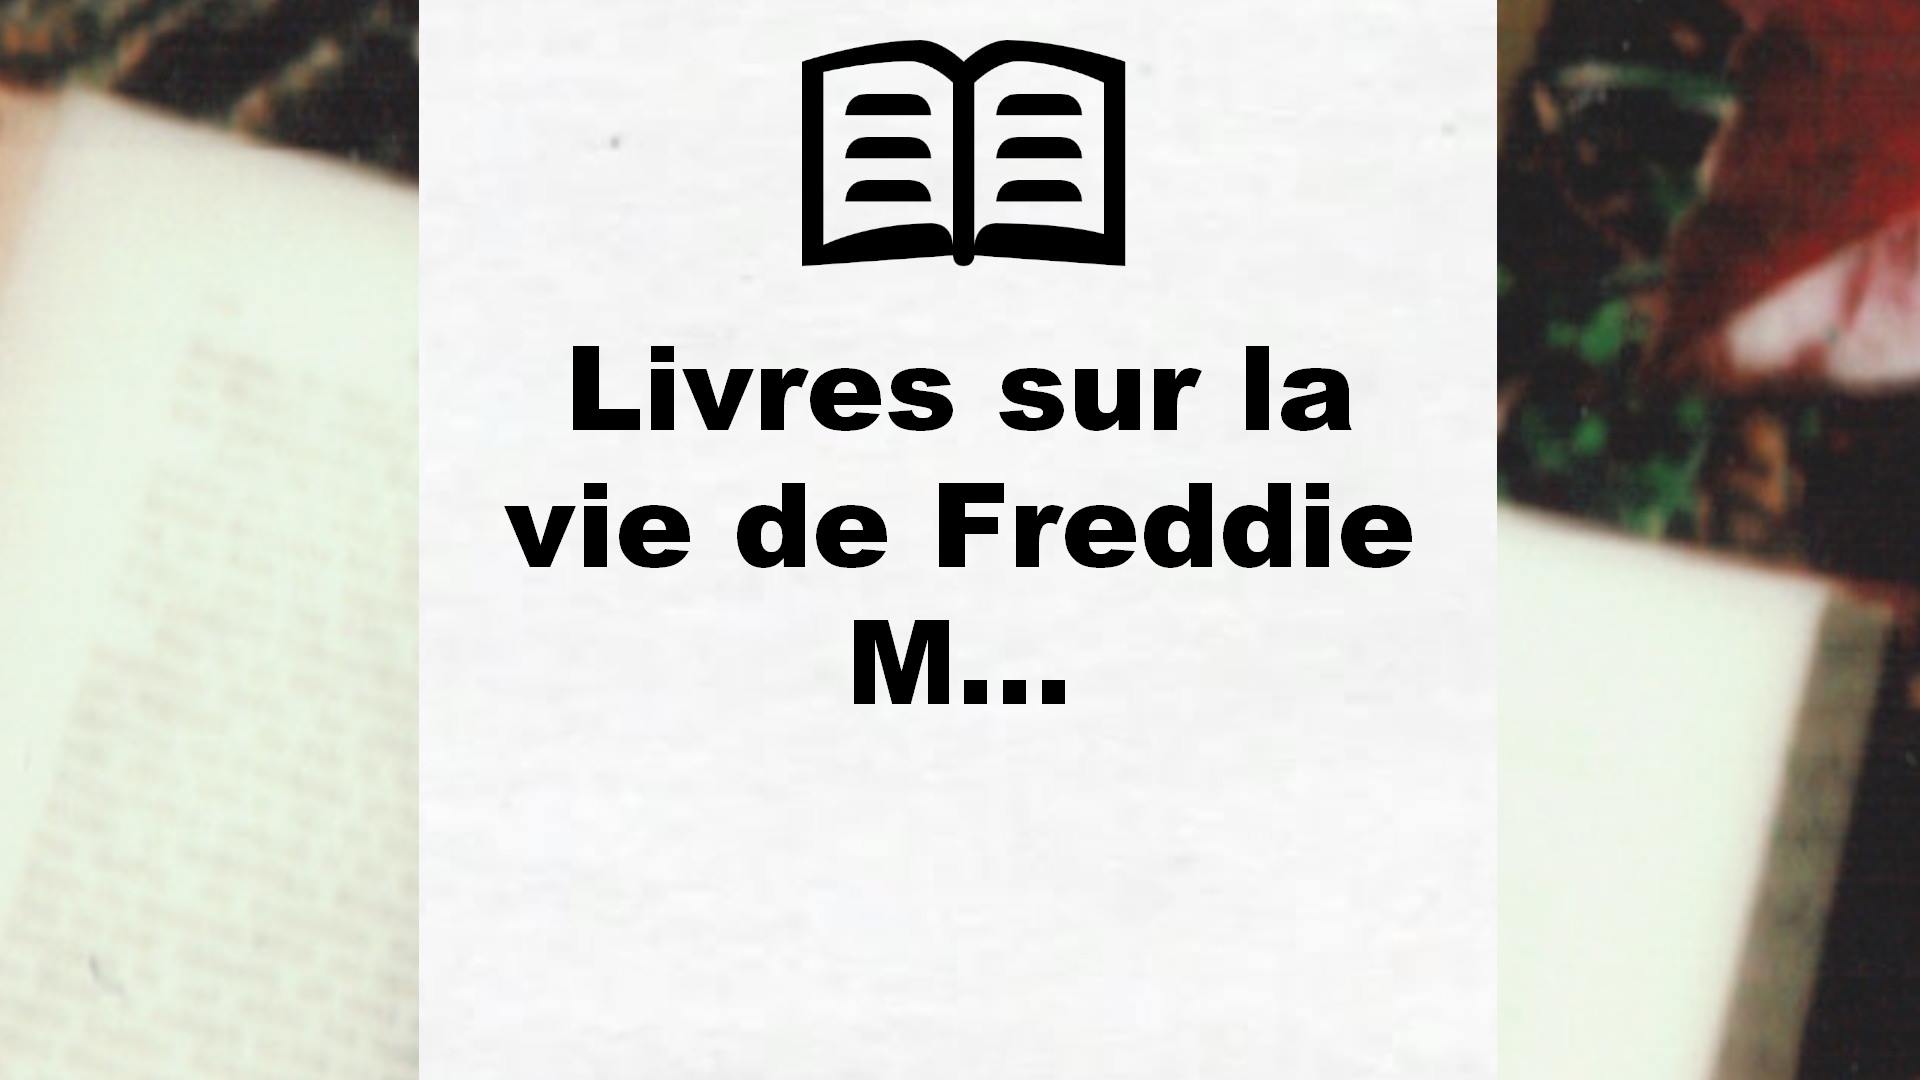 Livres sur la vie de Freddie Mercury